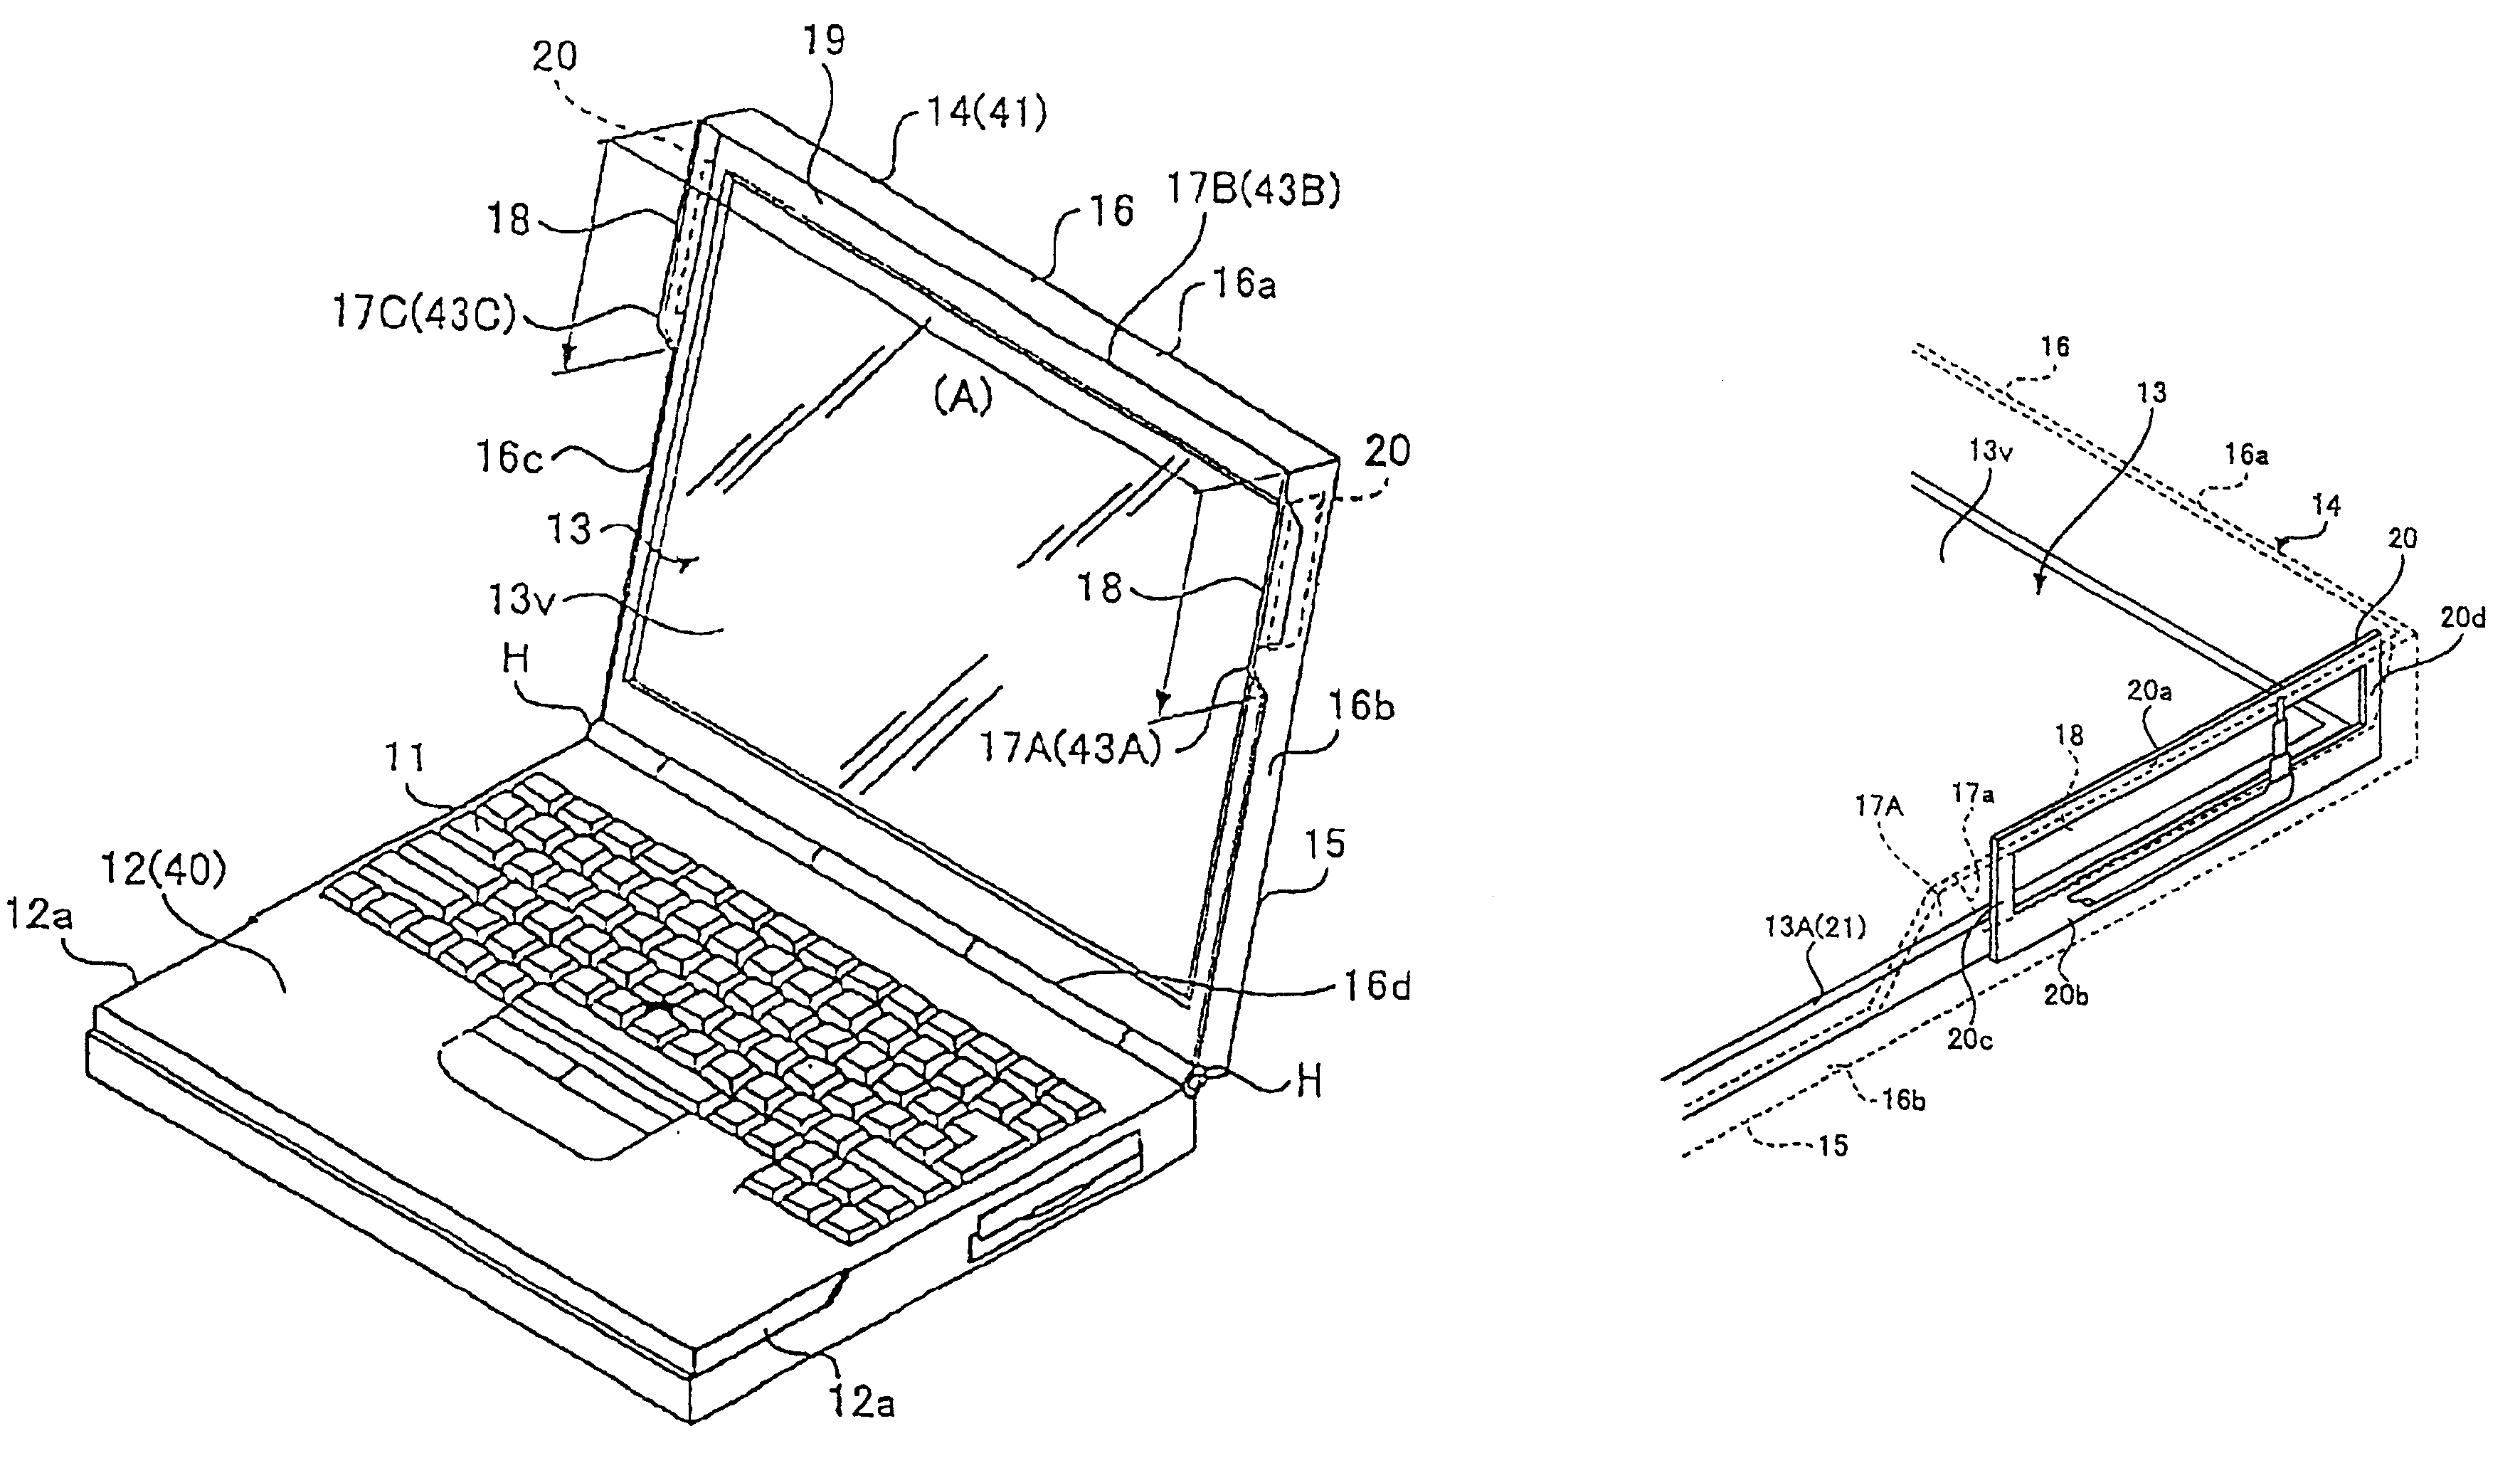 Display device, computer terminal, and antenna